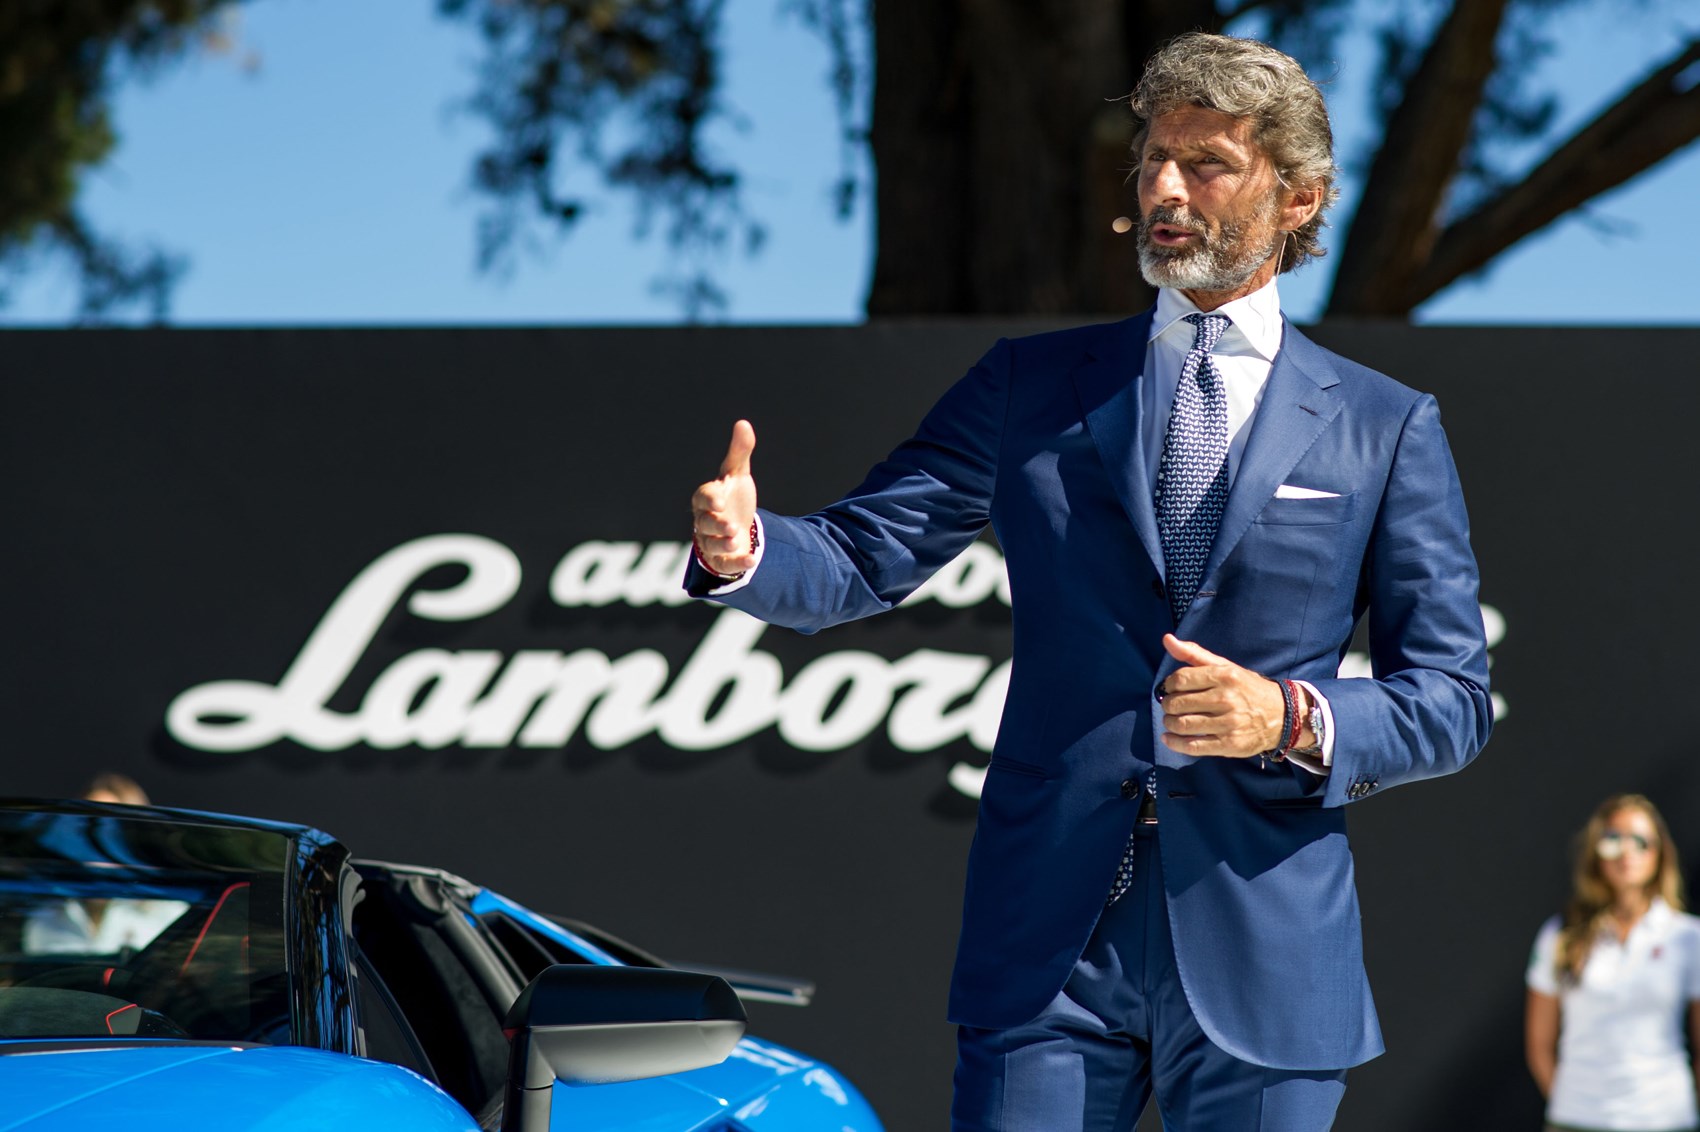 President and CEO of Automobili Lamborghini S.p.A., Stephan Winkelmann